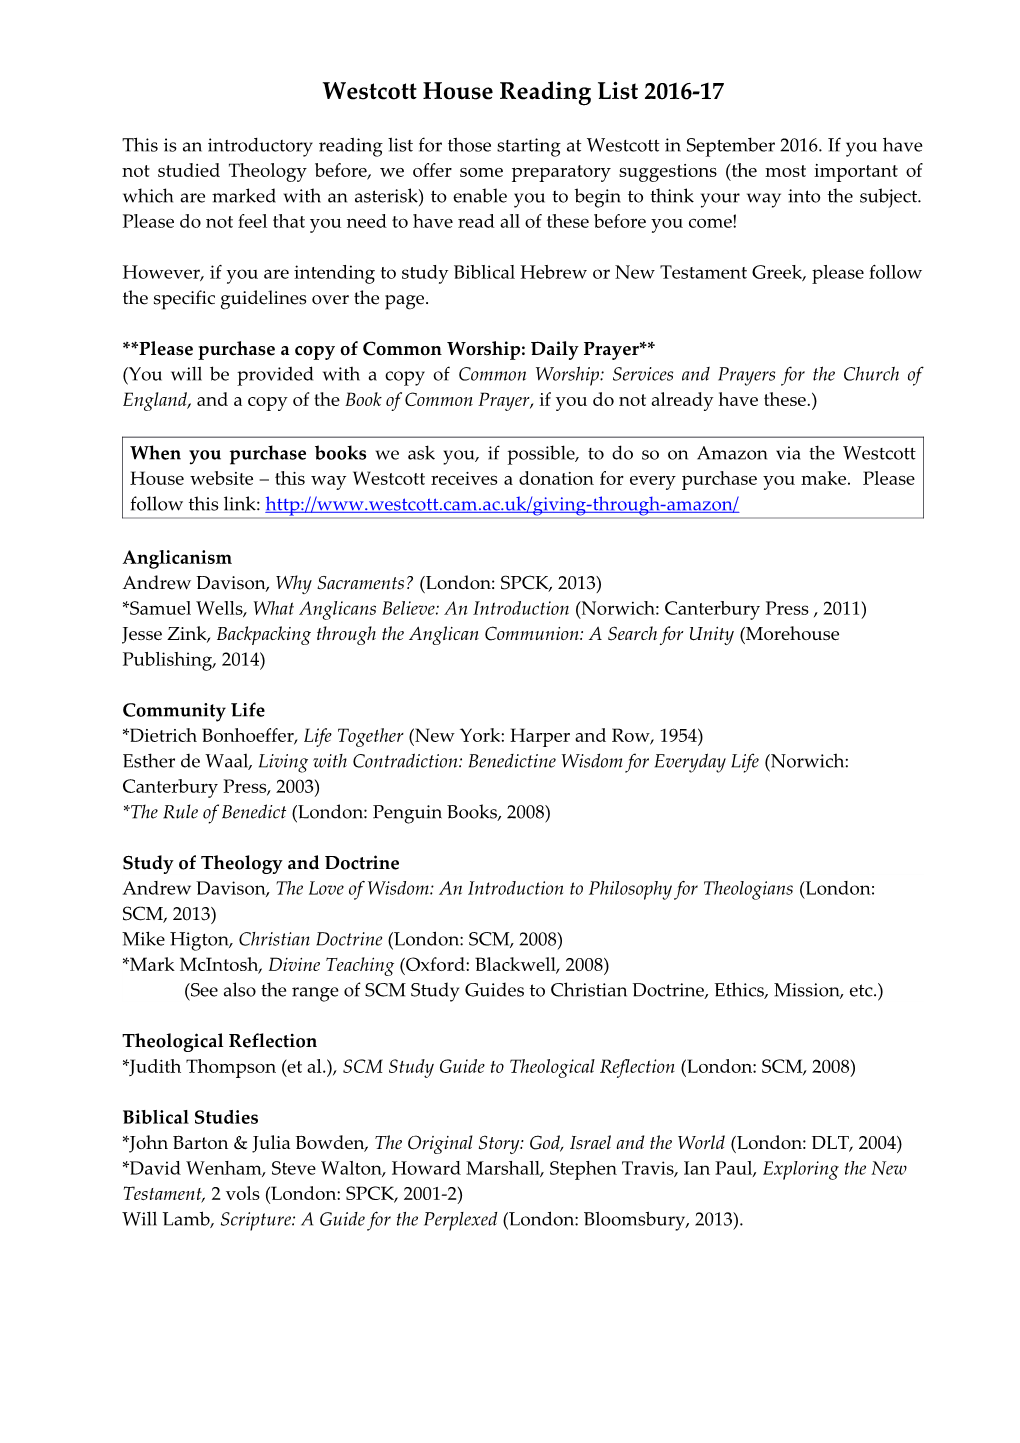 Westcott House Reading List, 2008